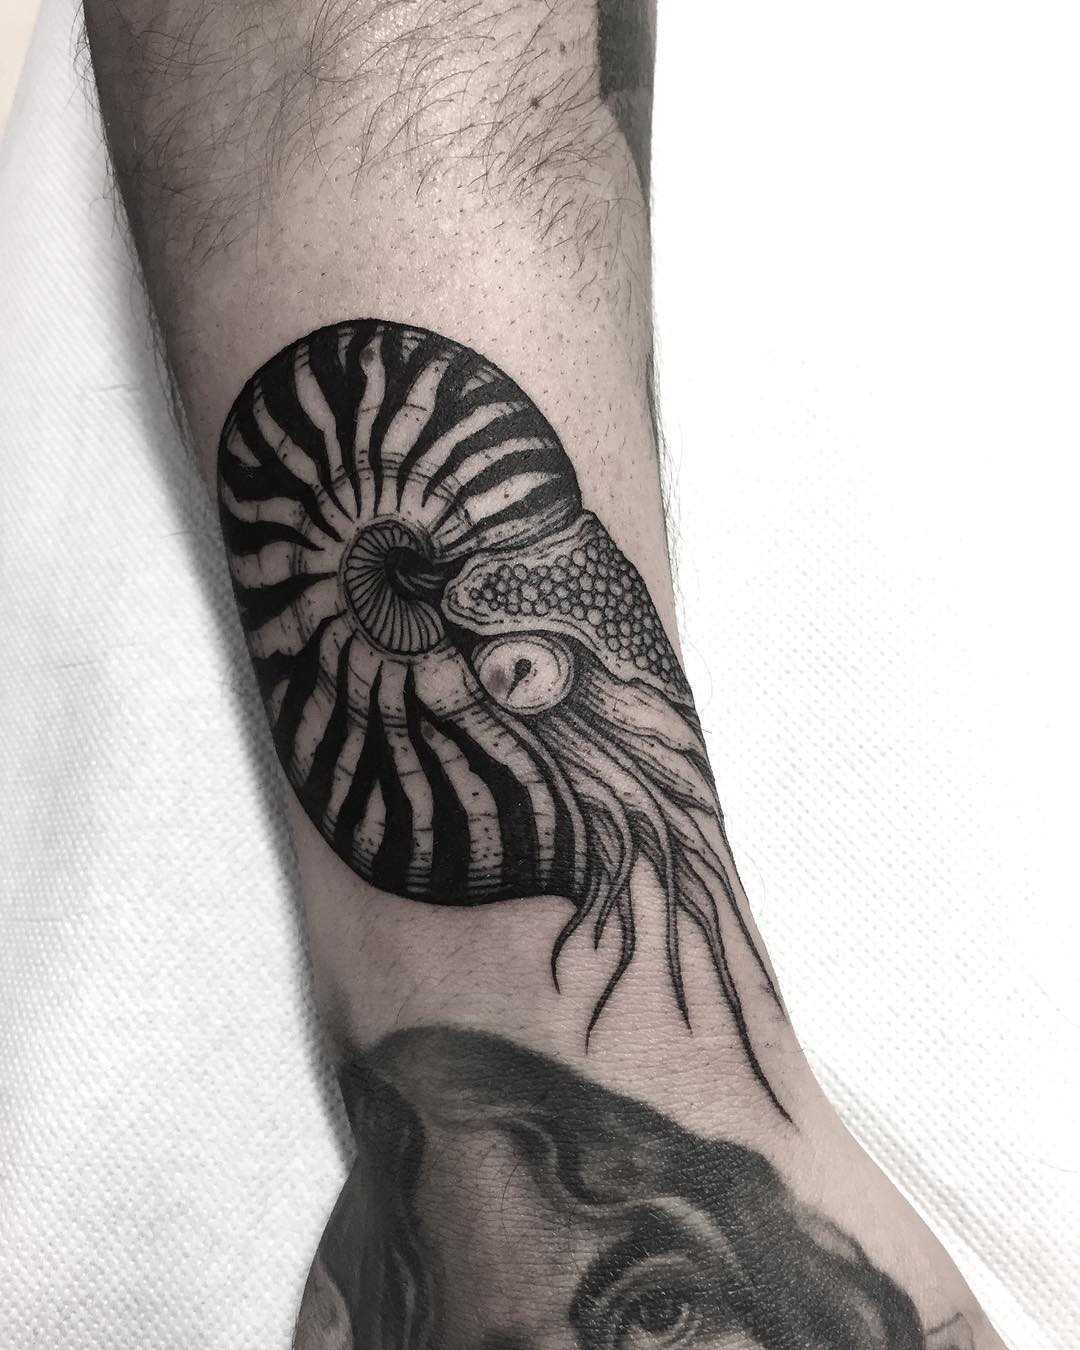 Nautilus done at Primordial Pain Tattoo